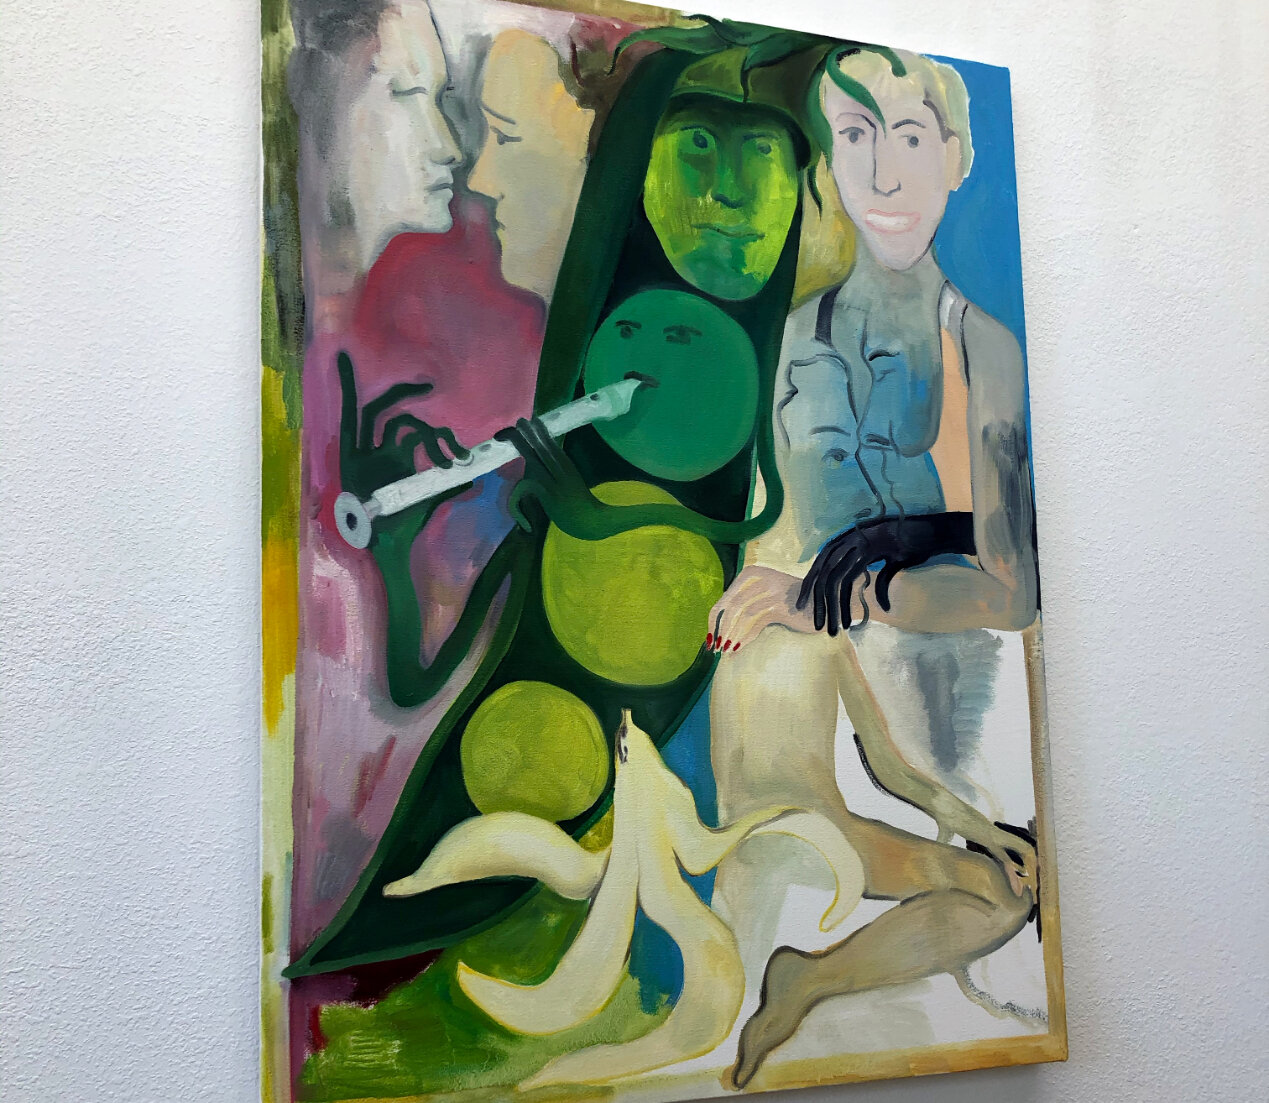  Daniel Ingroff  Green Fuse , 2019  Oil on canvas 36 x 27 inches (91.44 x 68.58 cm)  